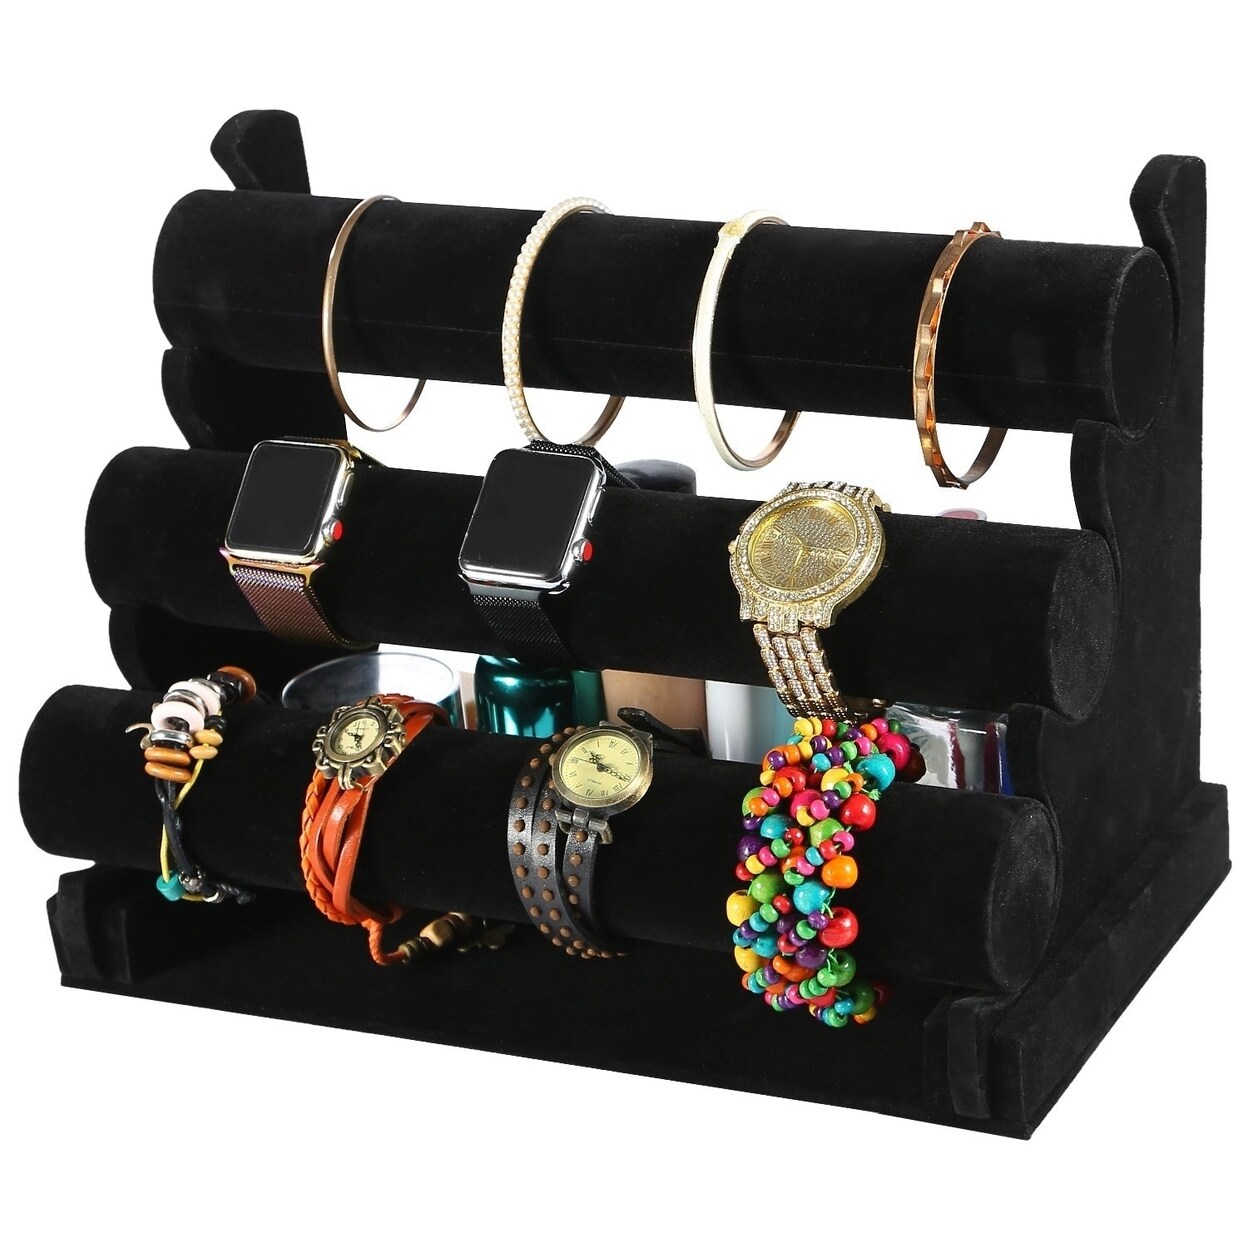 SKUSHOPS 3-Tier Velvet Jewelry Stand Removable Bracelet Holder Watch Jewelry Bangle Display Rack